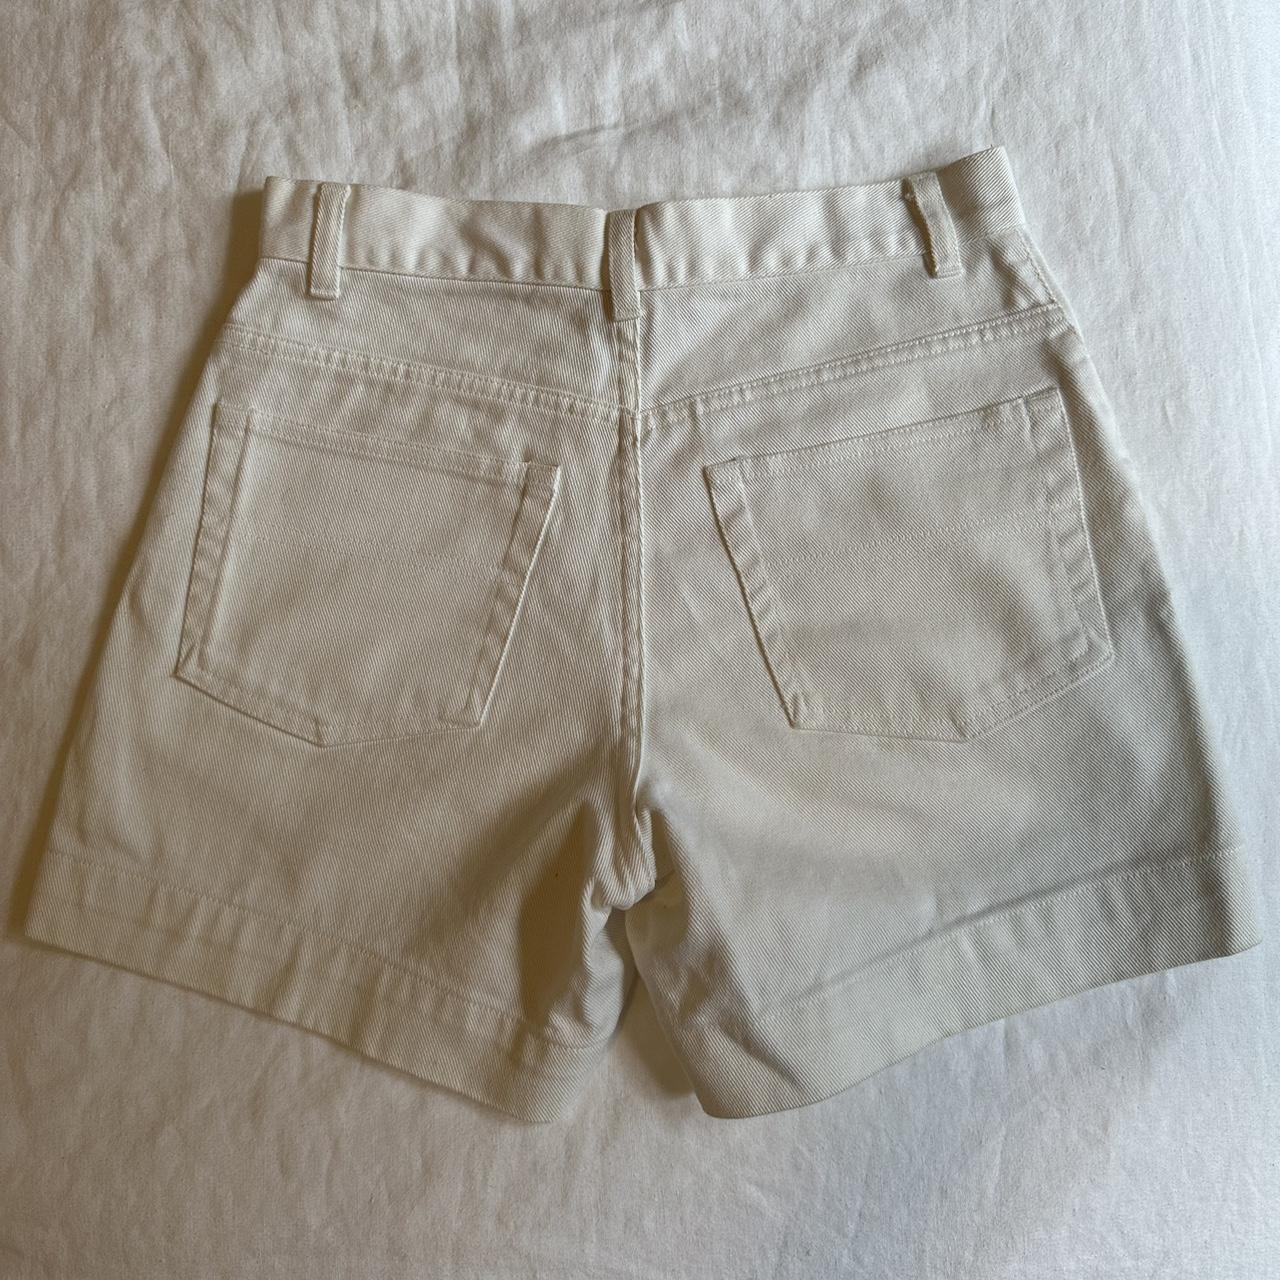 High Sierra Women's White Shorts (2)